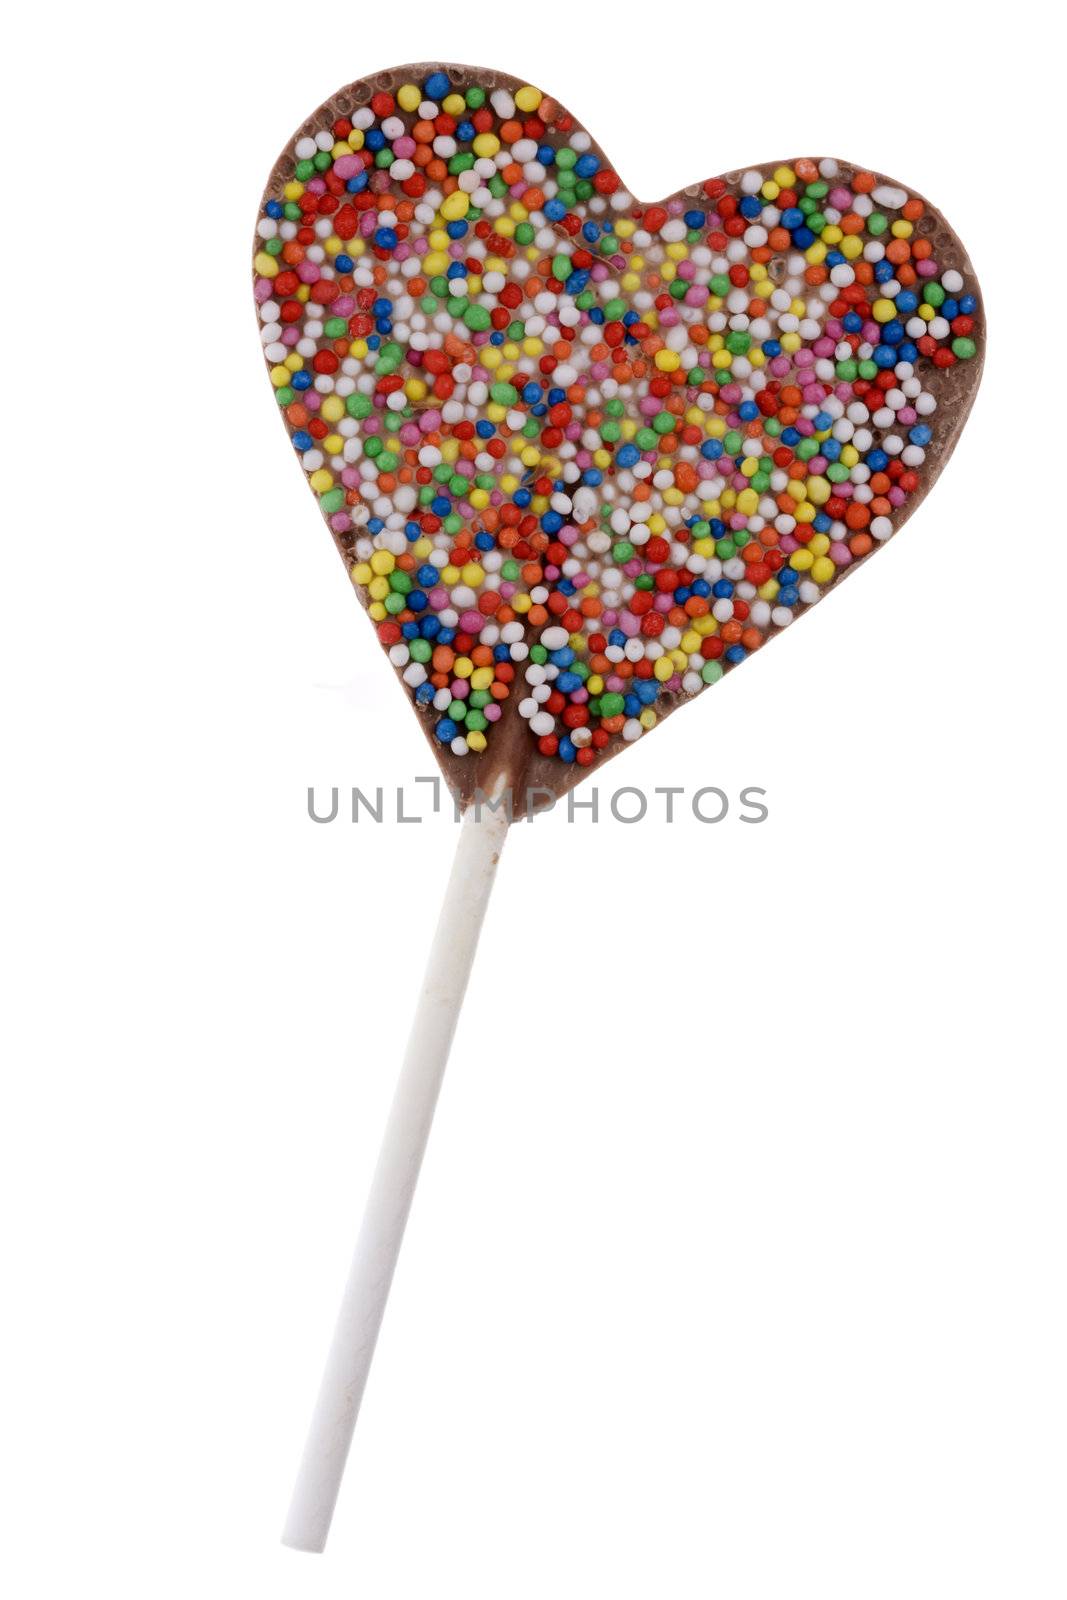 Isolated macro image of a chocolate lollipop.